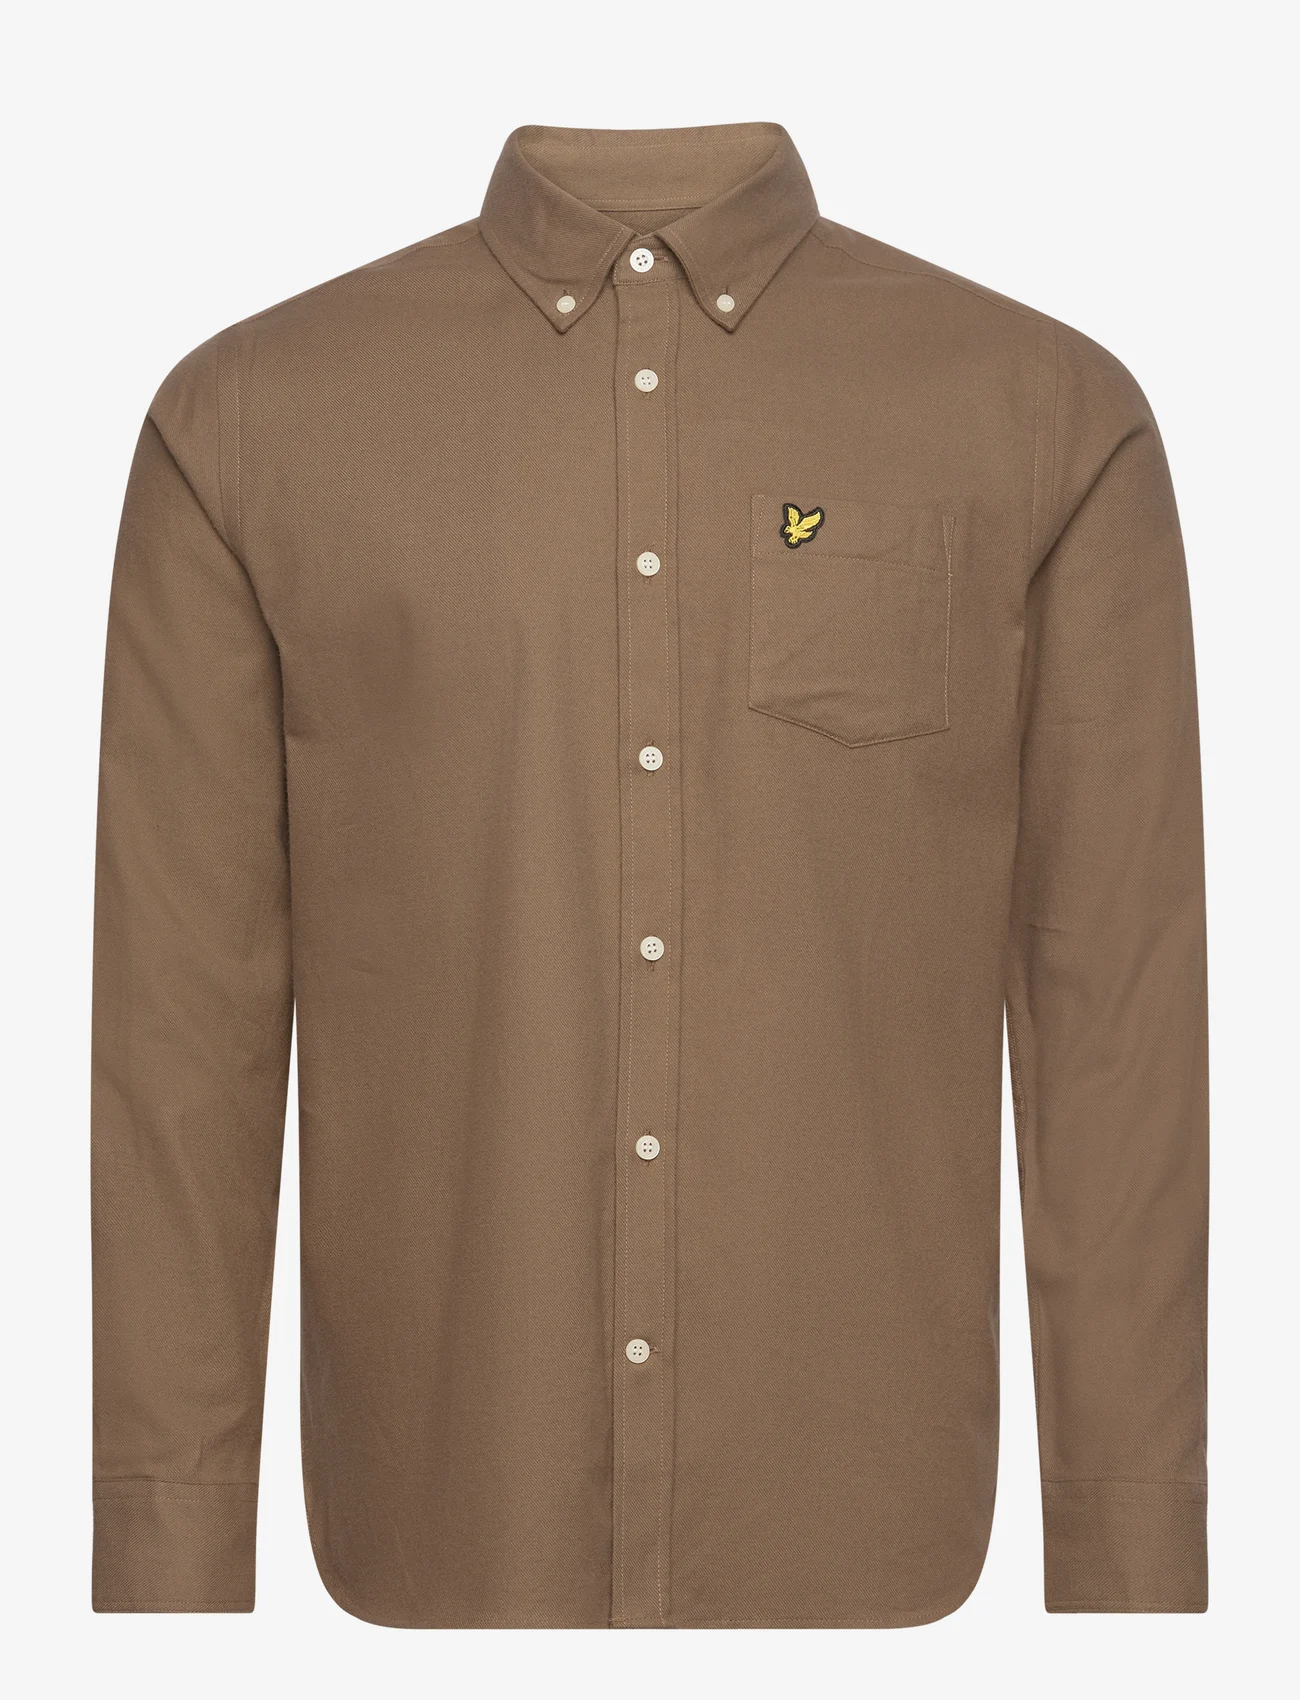 Lyle & Scott - Plain Flannel Shirt - ikdienas krekli - x080 linden khaki - 0